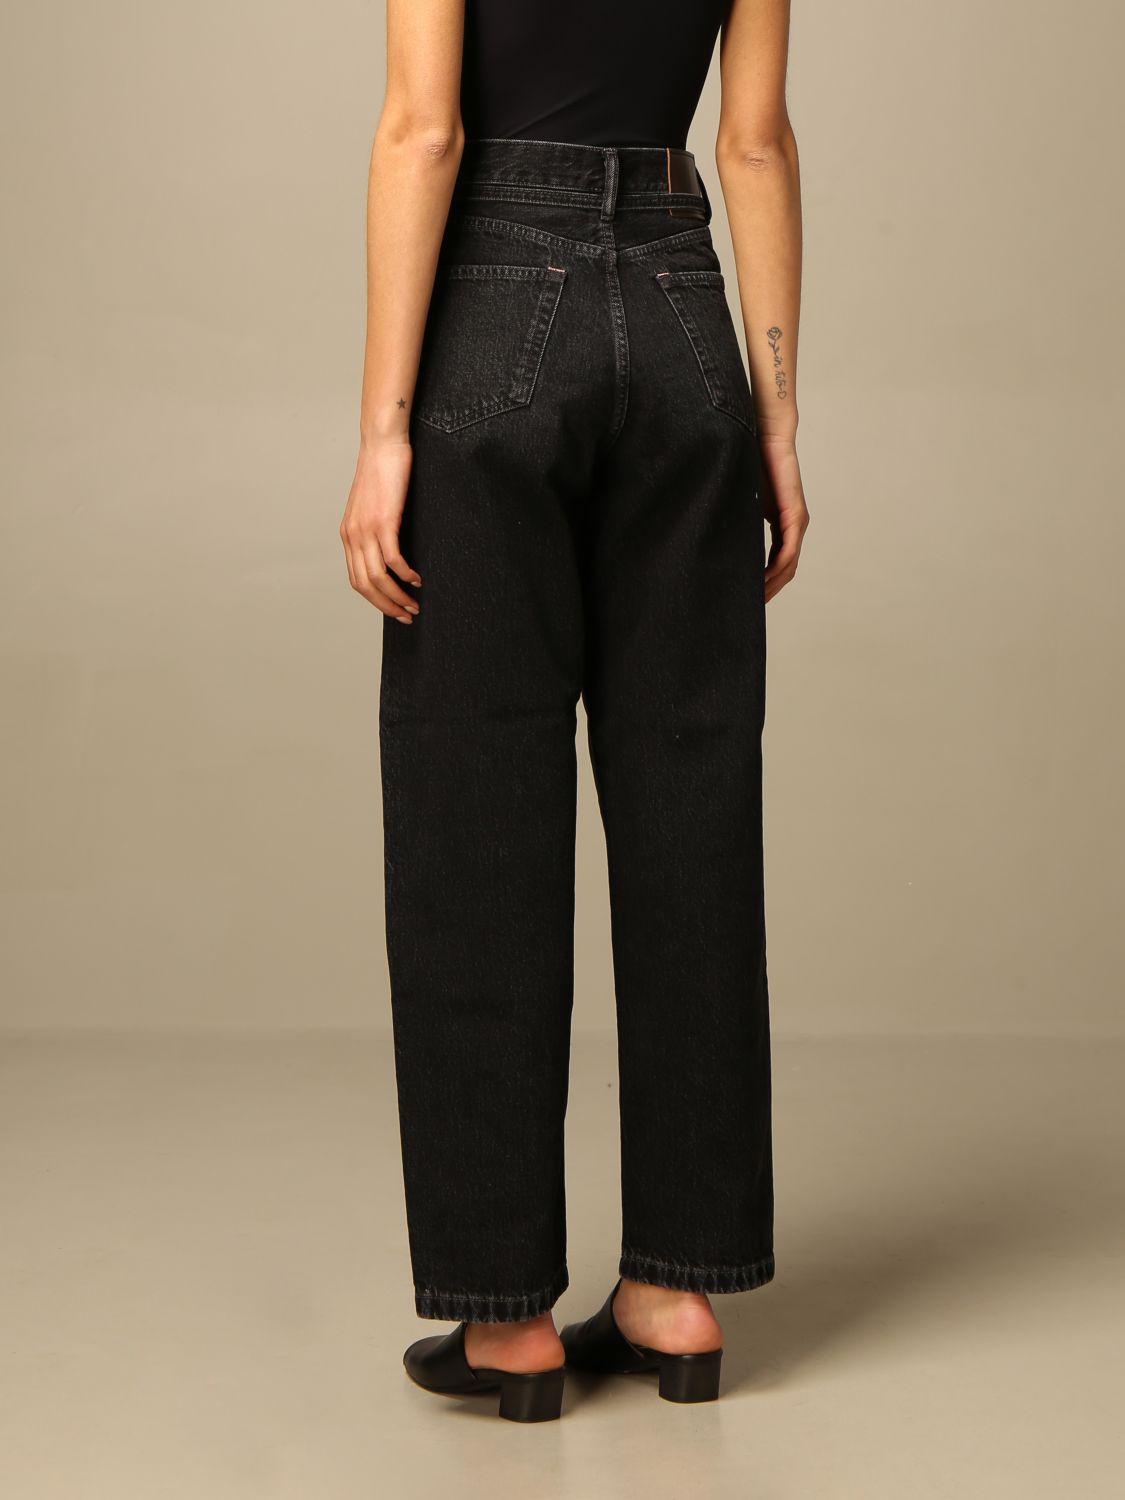 ACNE STUDIOS: 5-pocket wide jeans - Black | Acne Studios jeans